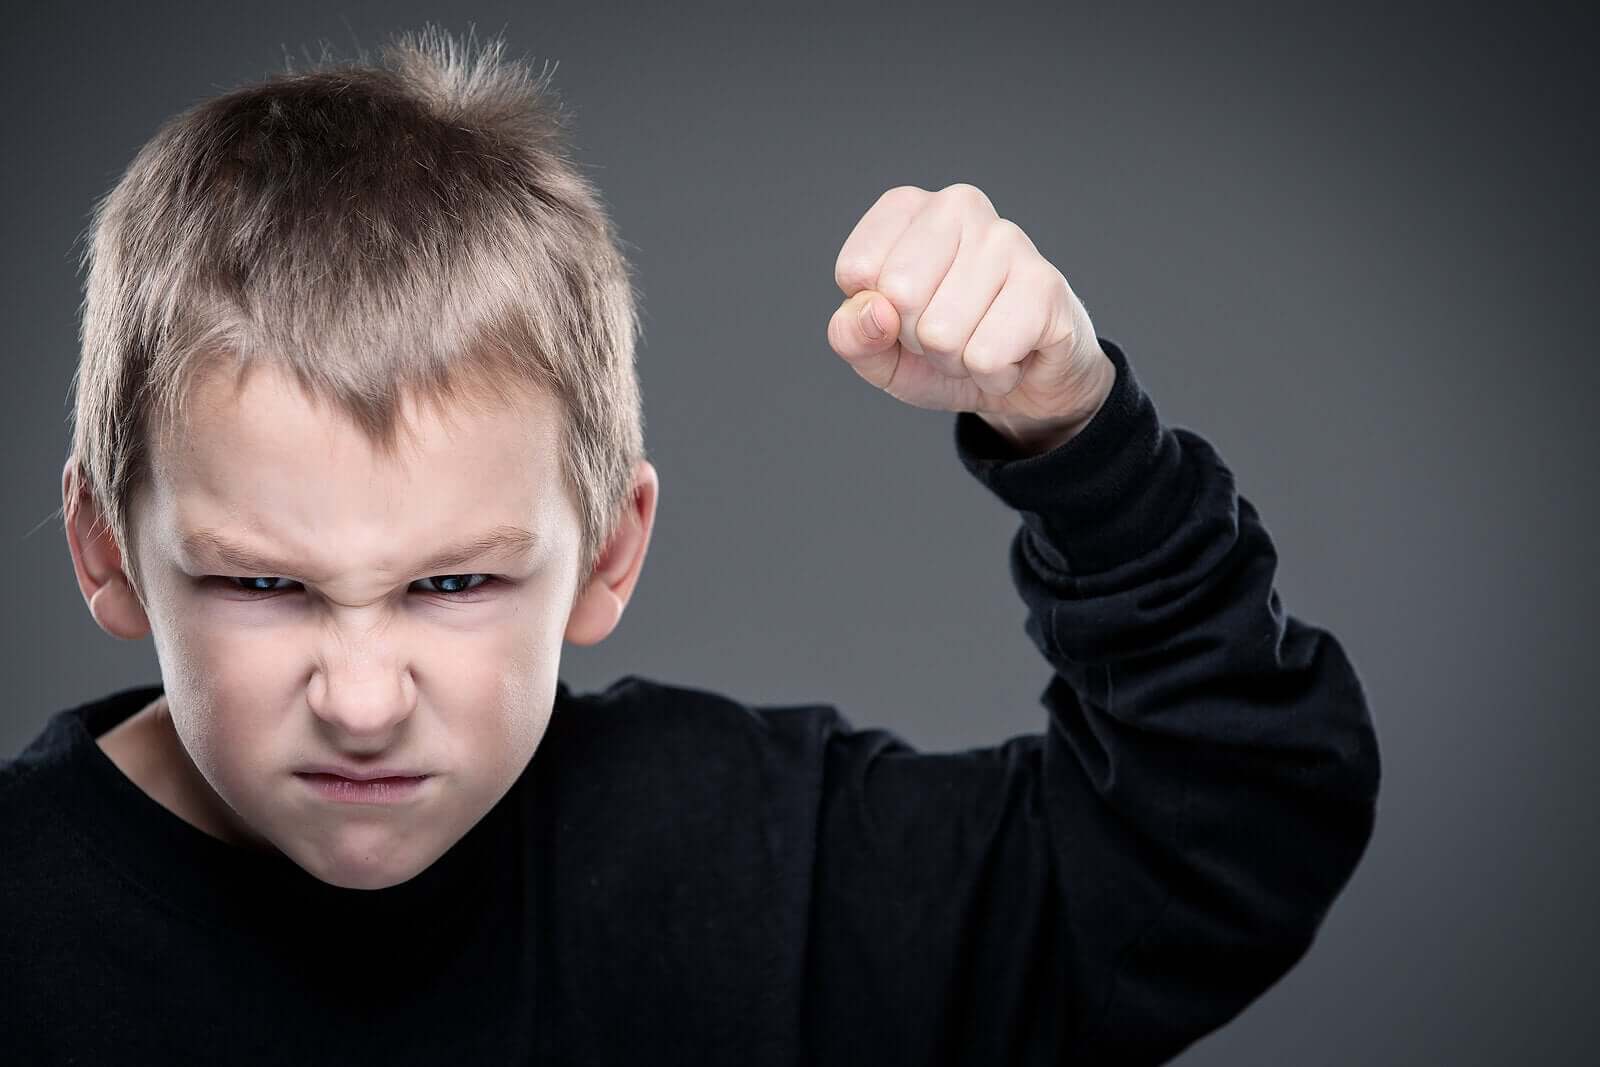 Why Do Children Become Aggressive?